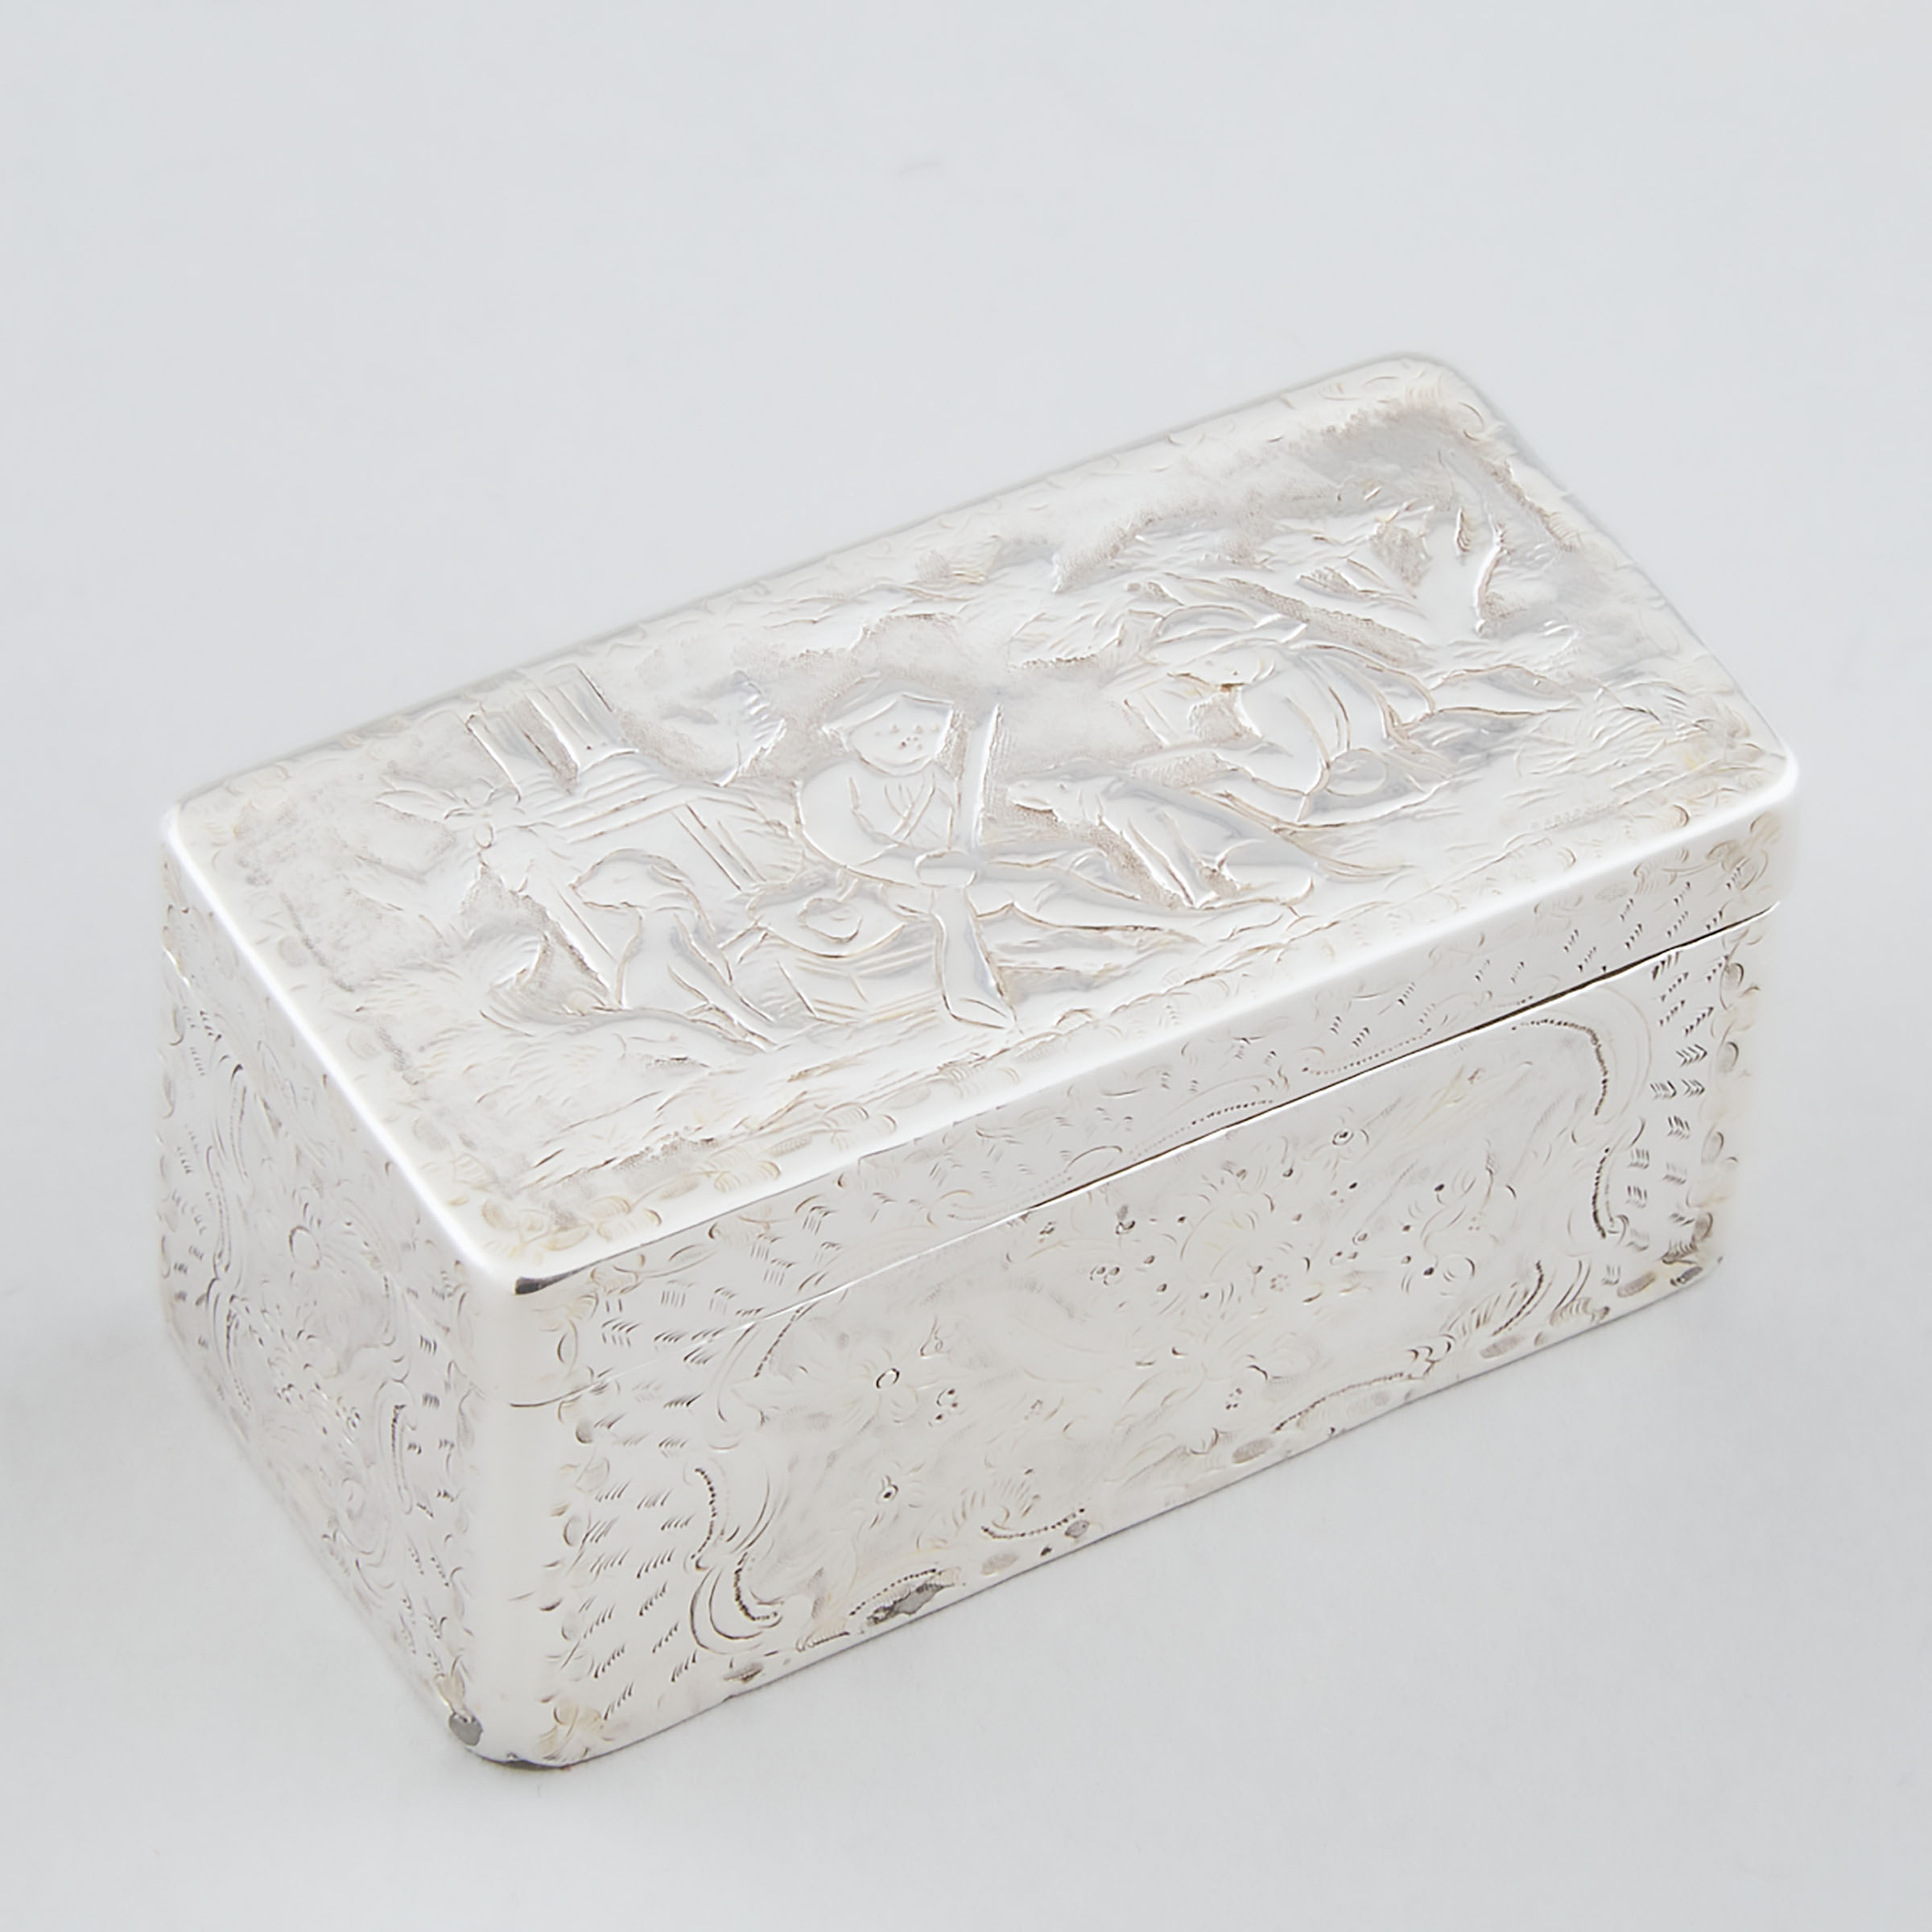 Continental Silver Rectangular Snuff Box, 19th century